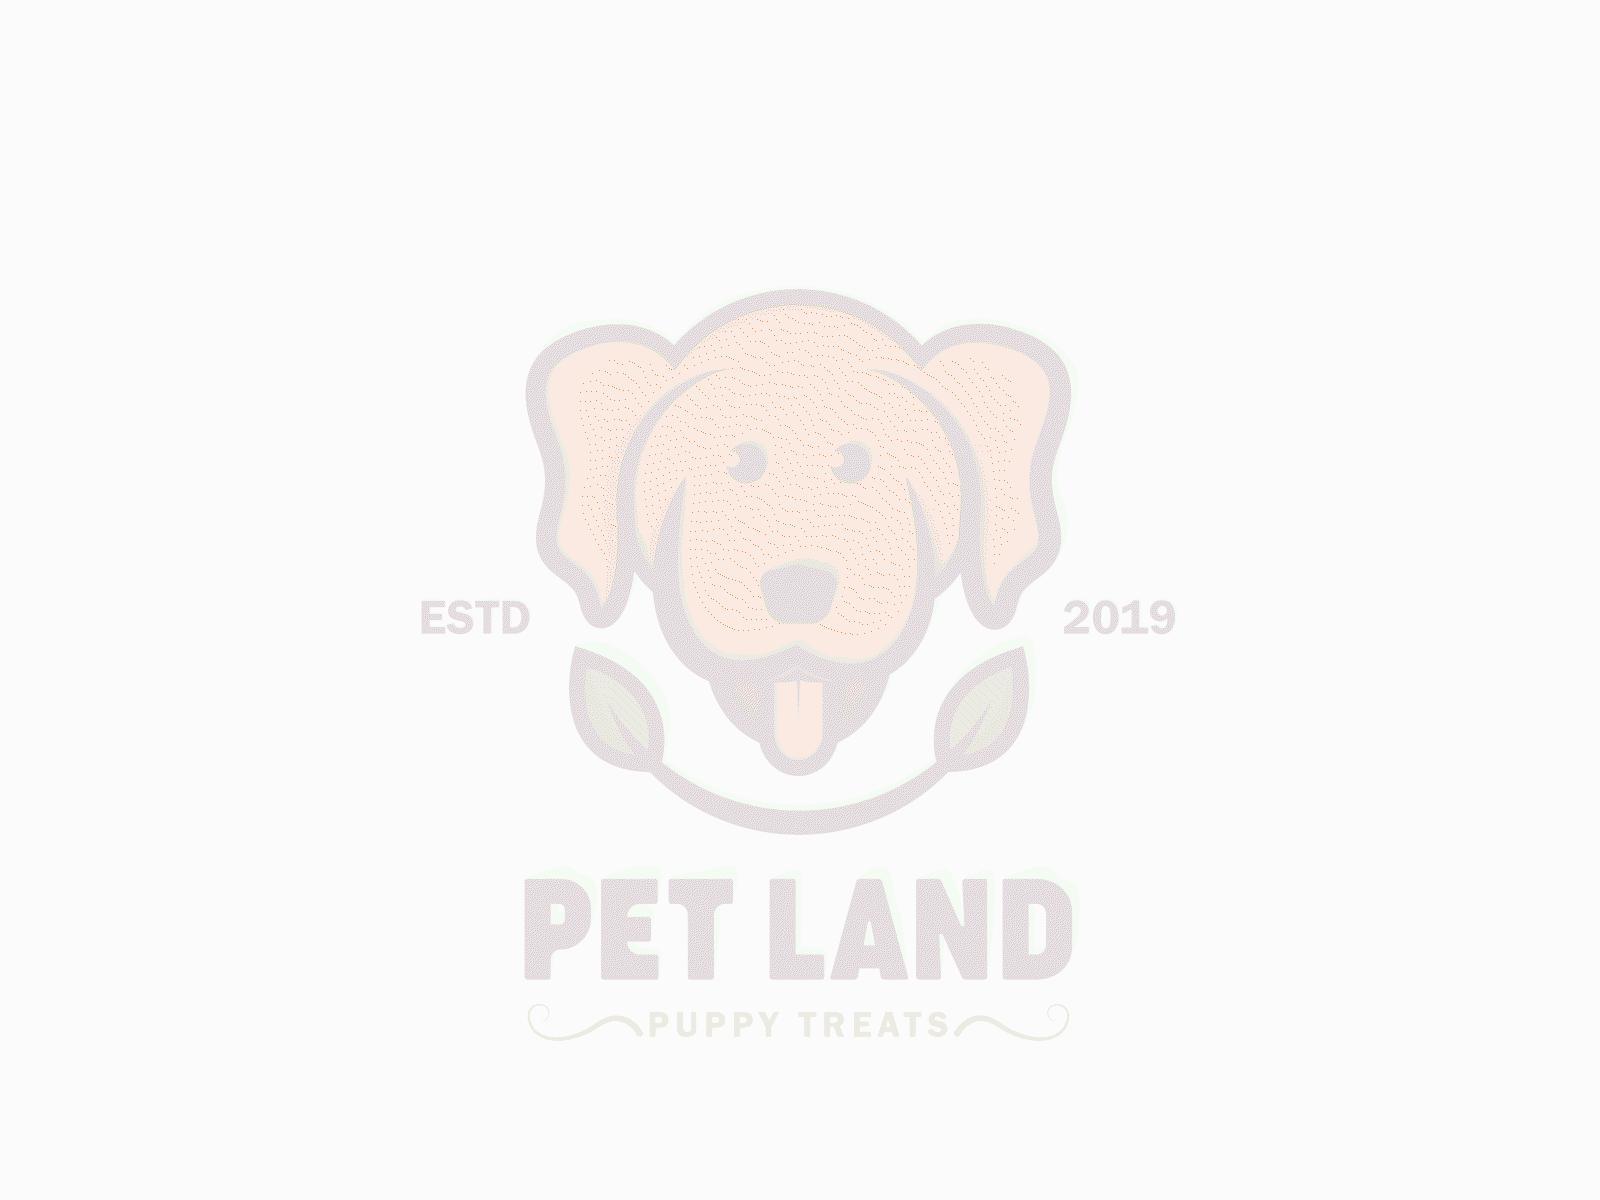 Pet land logo animation animated logo animation branding brown dog logo creative dog logo dog dog logo logo design logodesign motion graphics motion graphics design pet dog logo pet logo puppy paws puppy paws logo